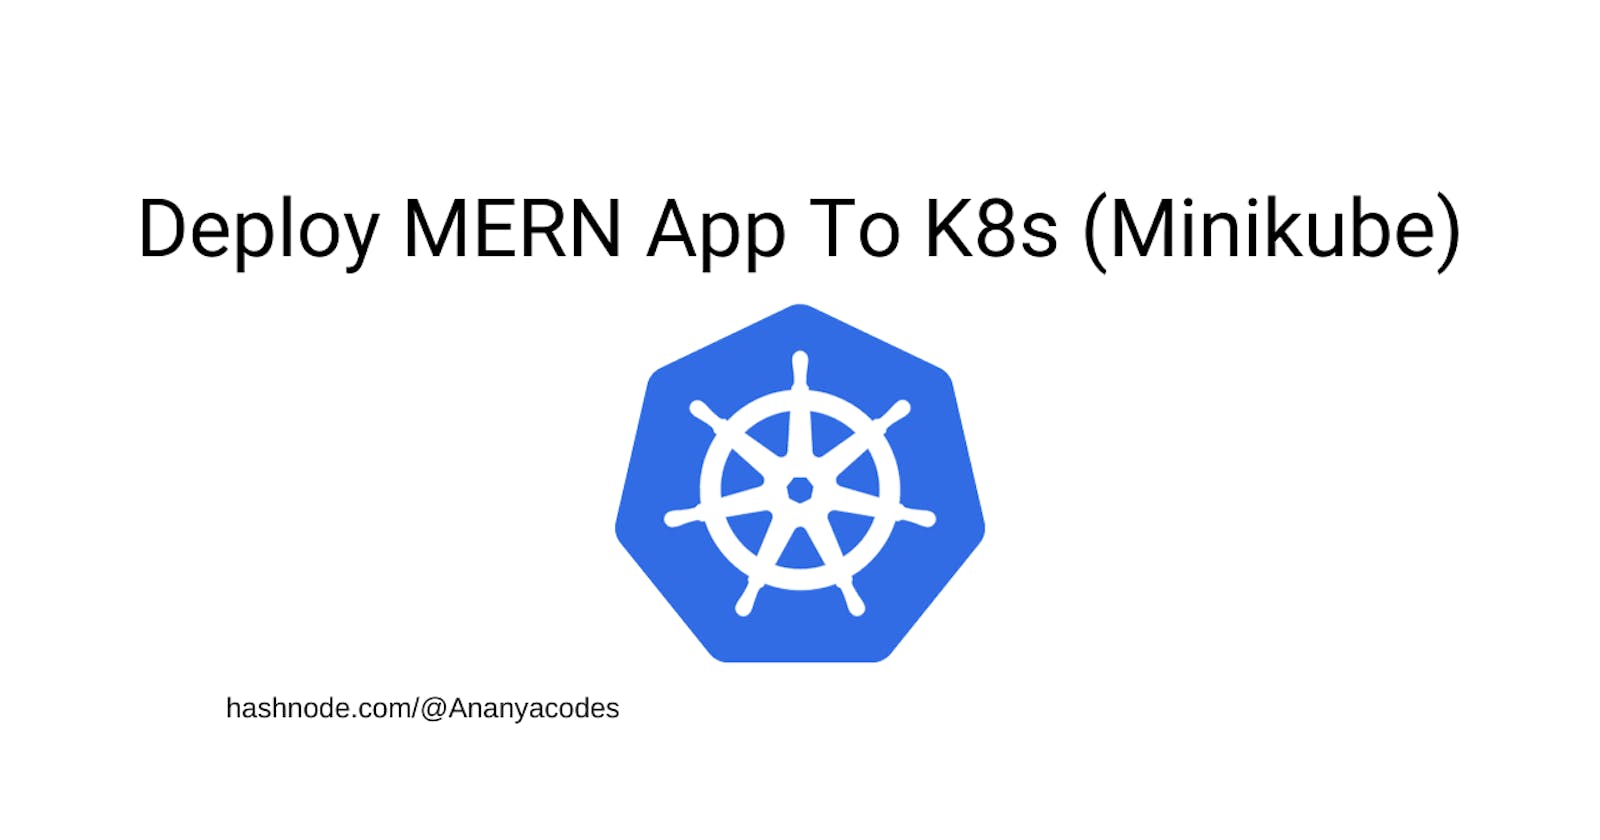 Deploy MERN App To K8s (Minikube)